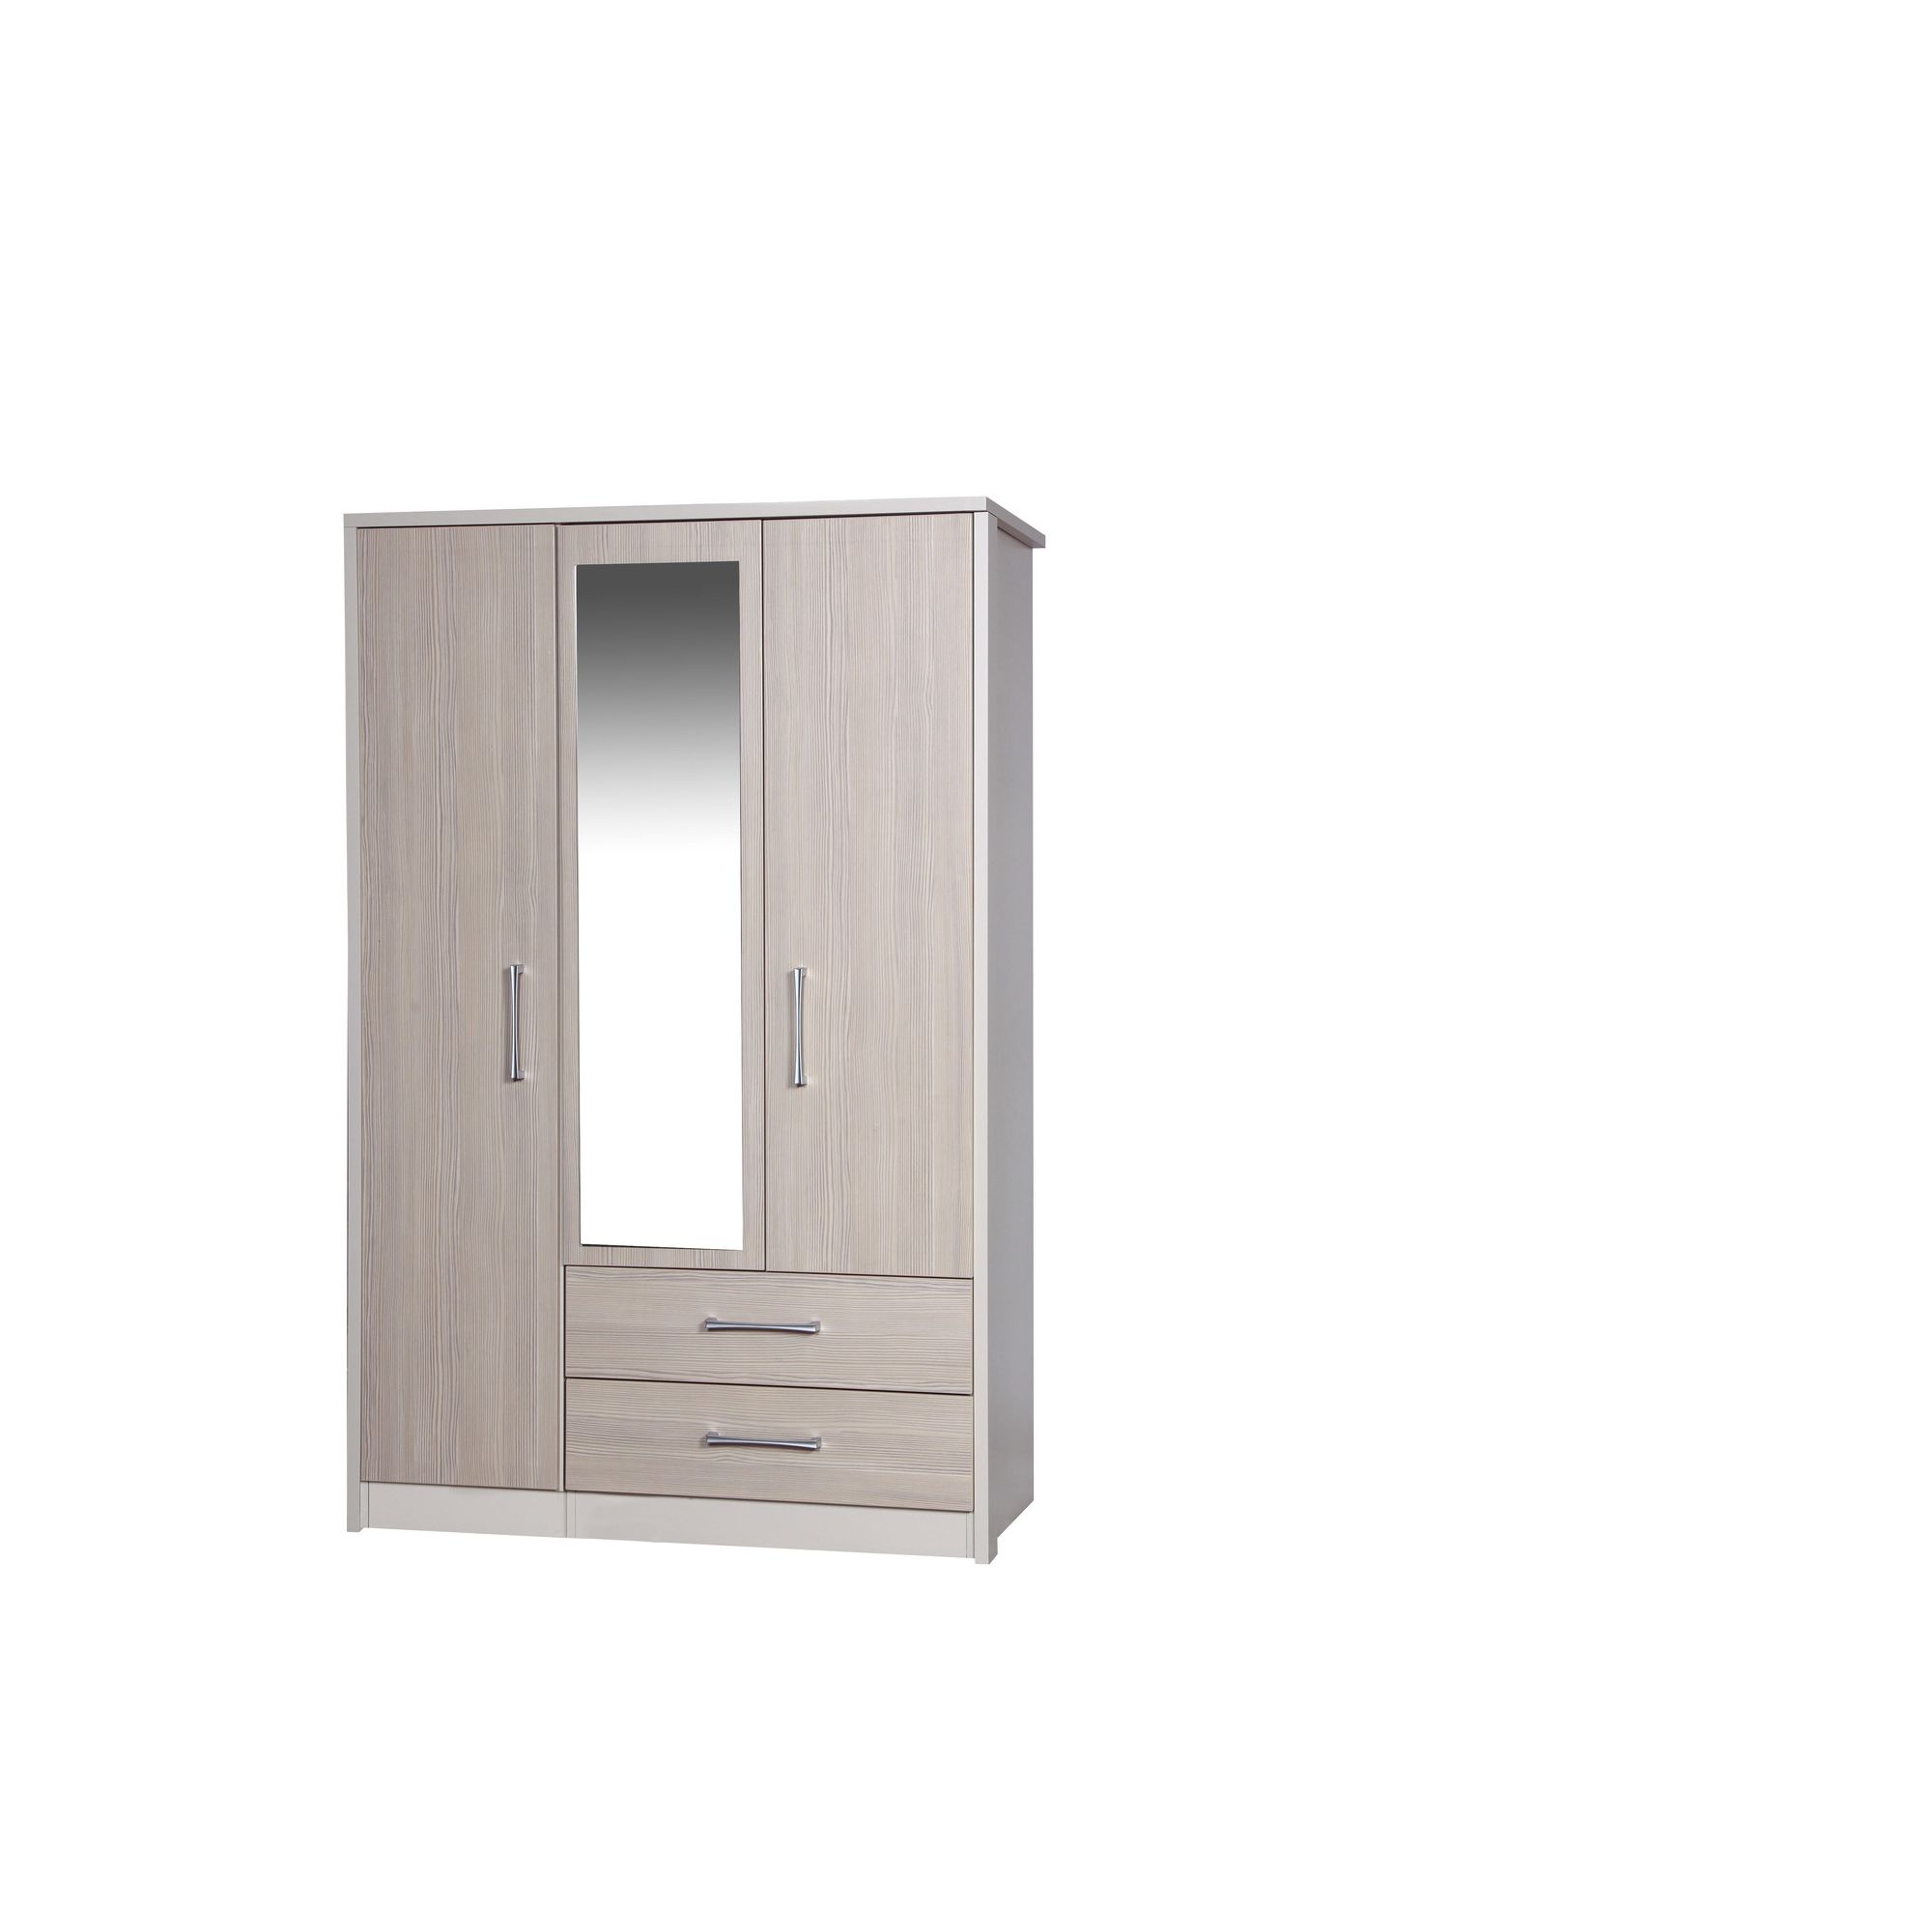 Alto Furniture Avola 3 Door Combi Wardrobe with Mirror - Cream Carcass With Champagne Avola at Tesco Direct